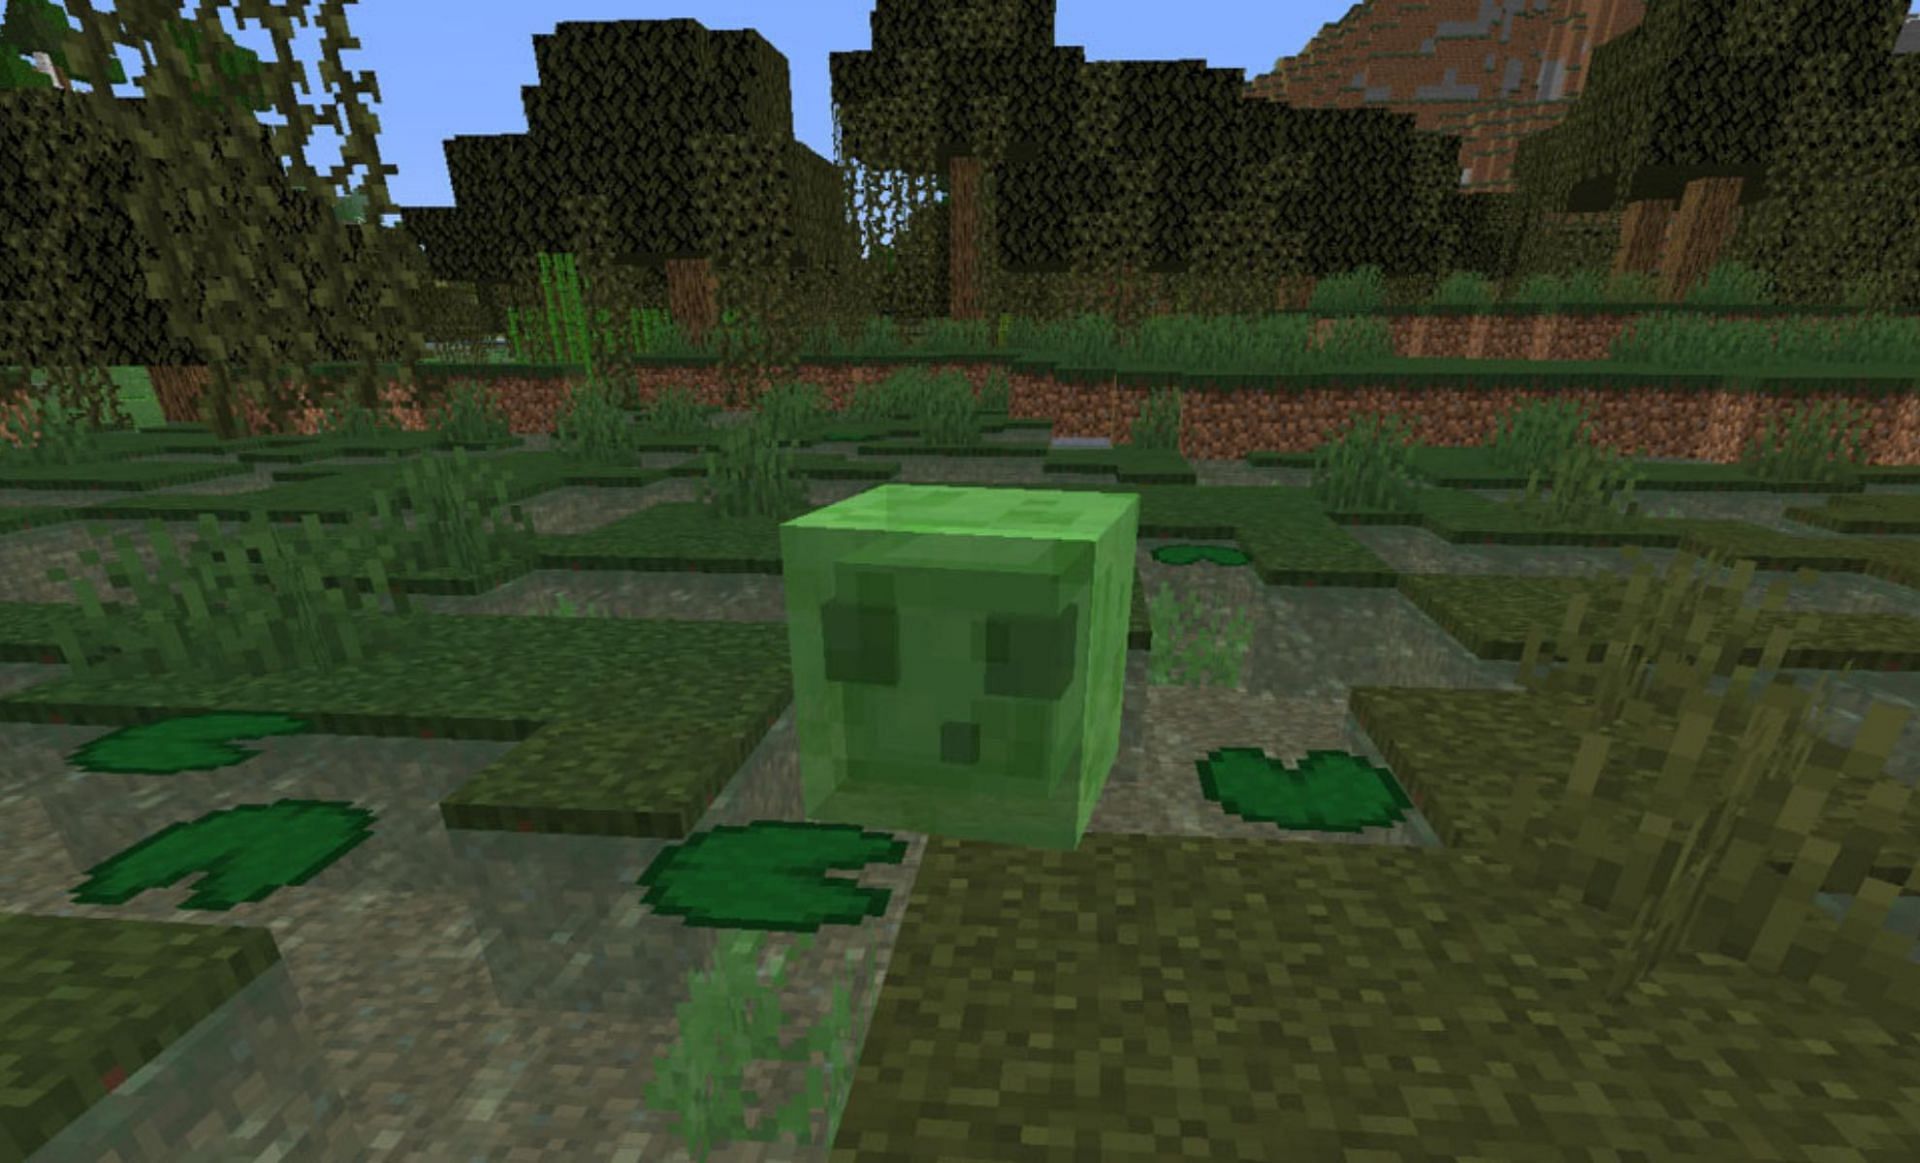 Slime in swamp biome (Image via Mojang)